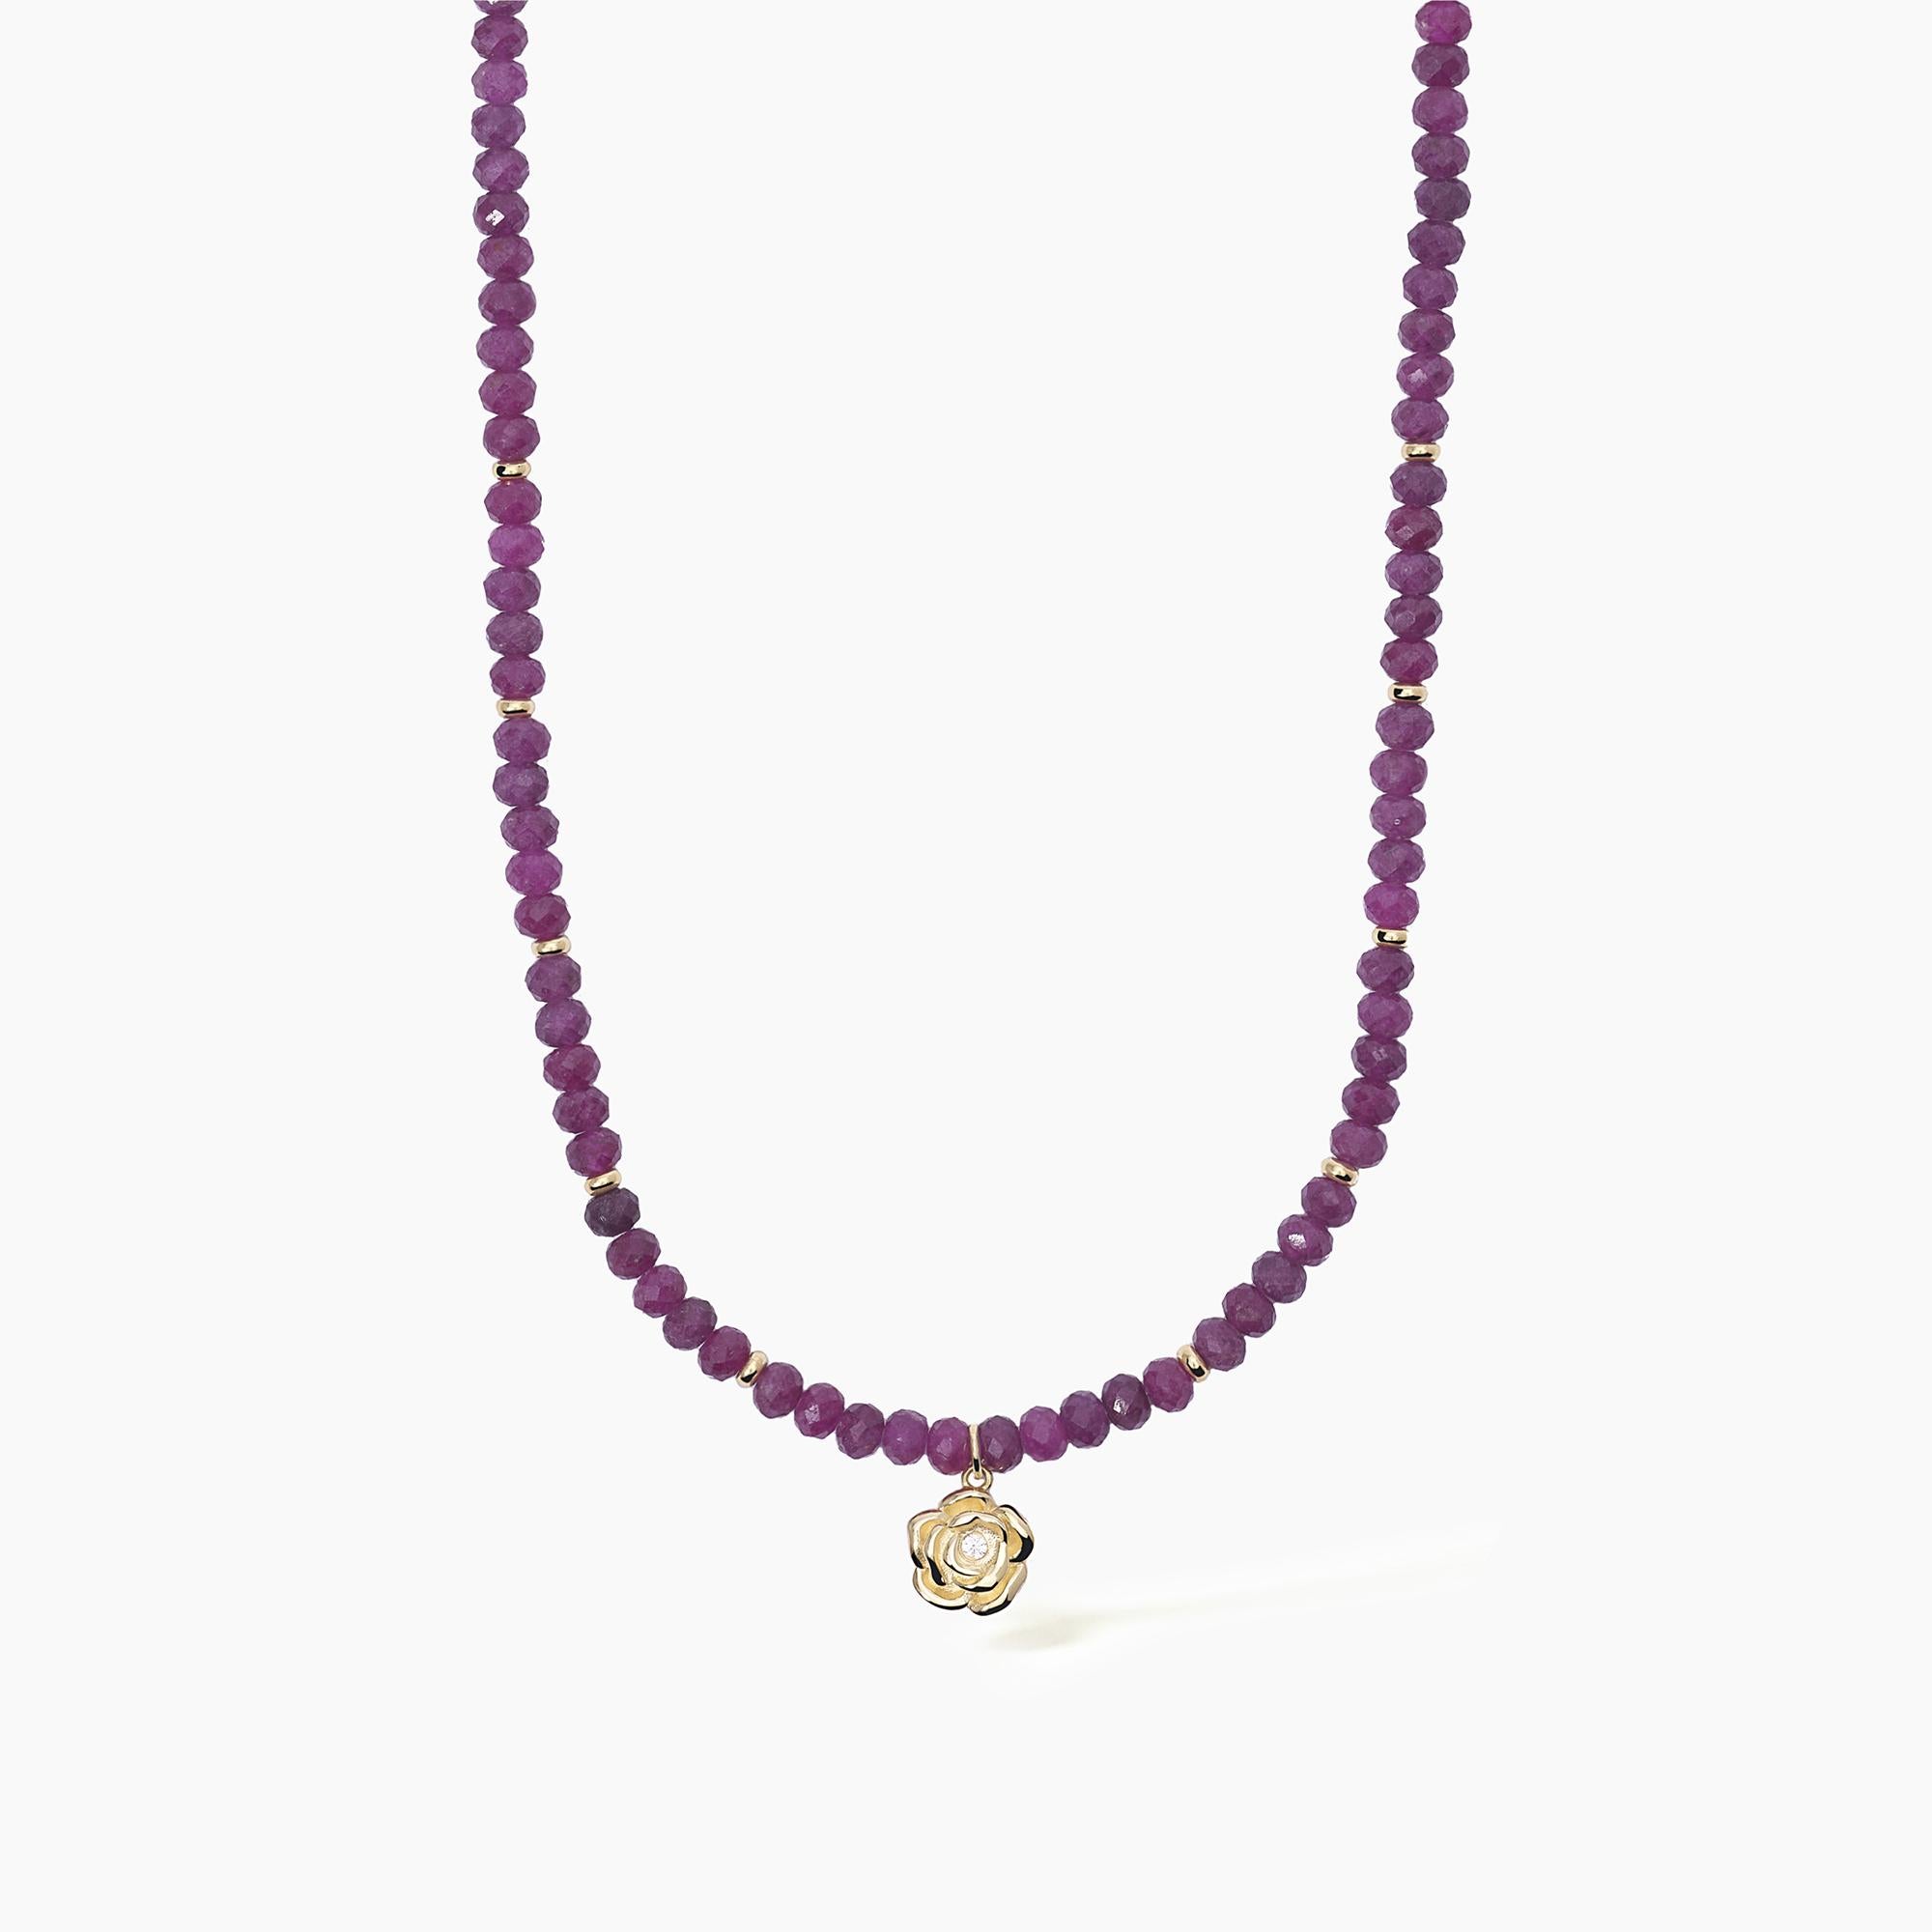 Mabina Woman - Choker with rubies and LA VIE EN ROSE pendant - 553518